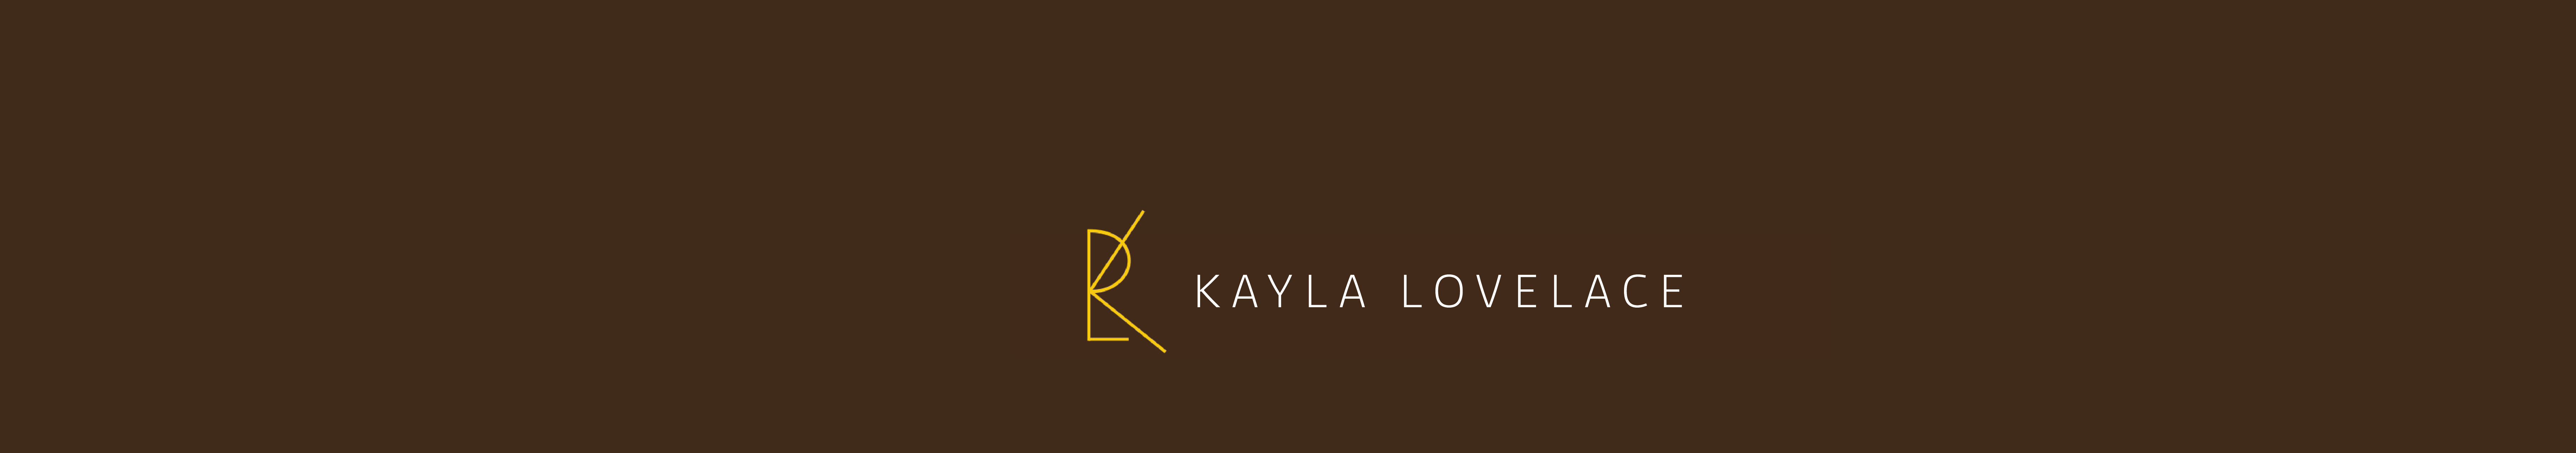 Kayla Lovelace's profile banner